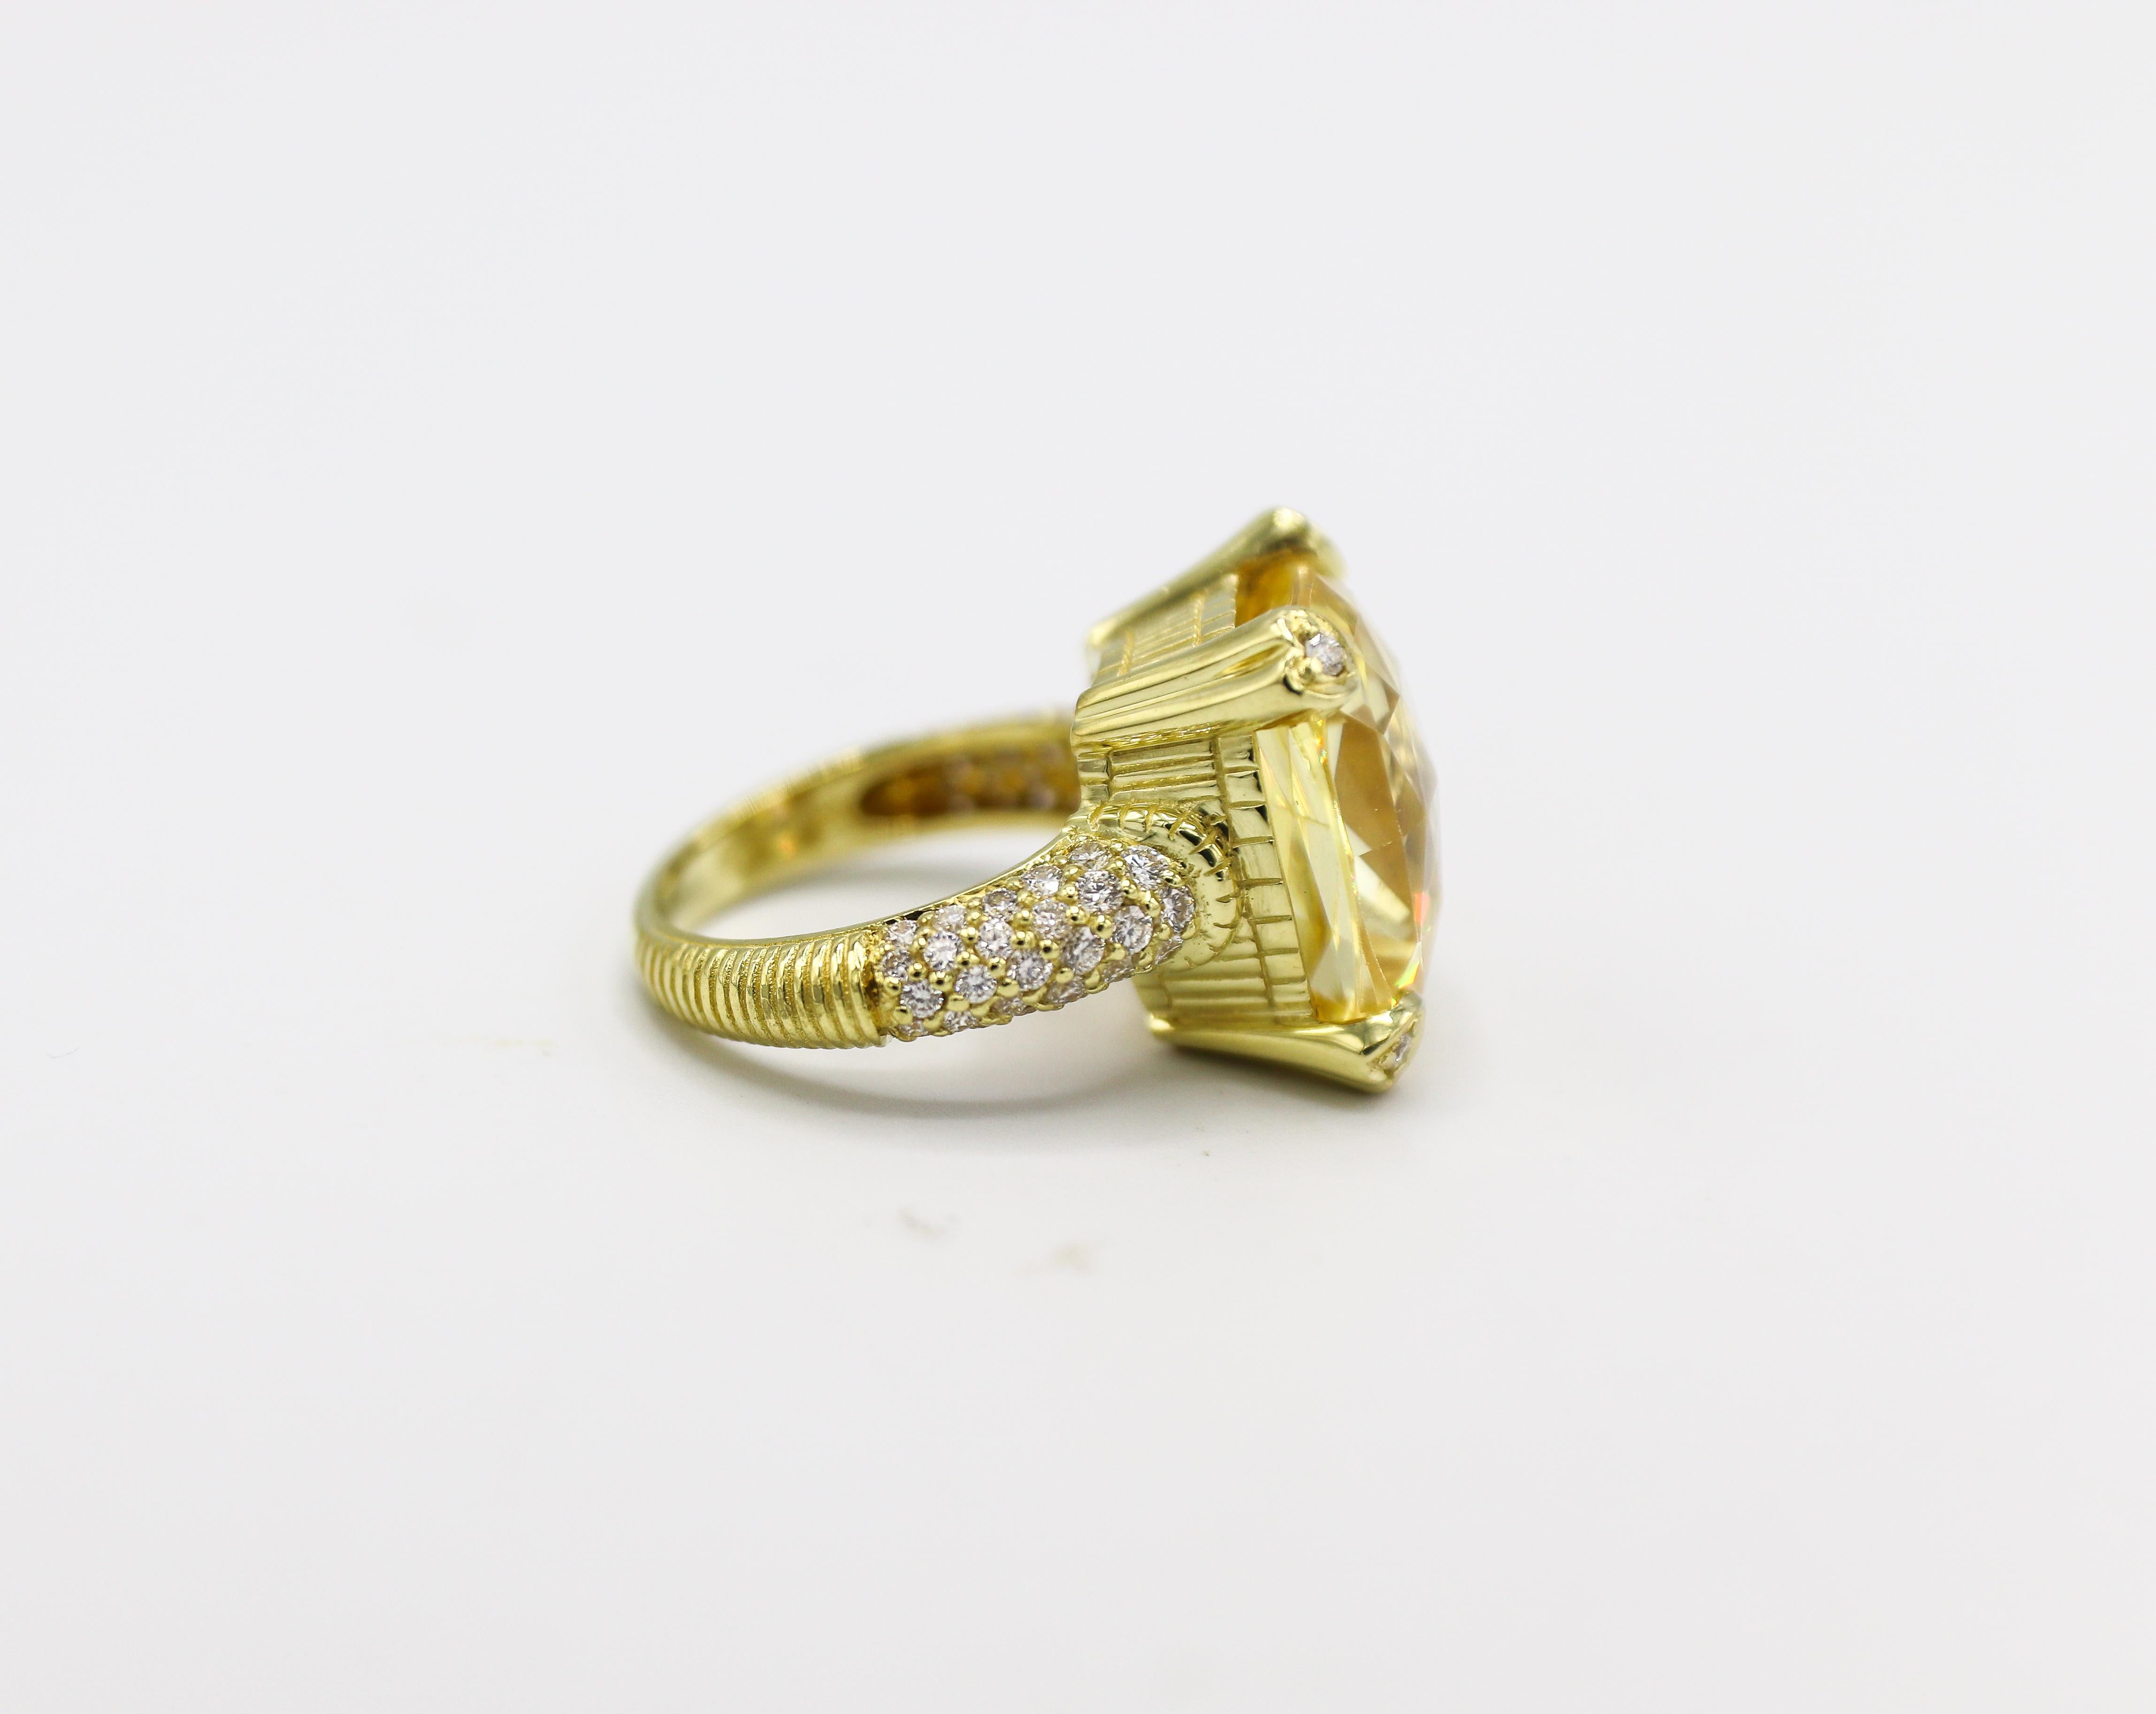 Judith Ripka 18 Karat Yellow Gold Diamond & Yellow Crystal Cocktail Ring 
Metal: 18k yellow gold
Weight: 15.96 grams
Diamonds: Approx. .75 CTW G VS round diamonds
Crystal: 16 x 13.5mm 
Size: 6.5 (US)
